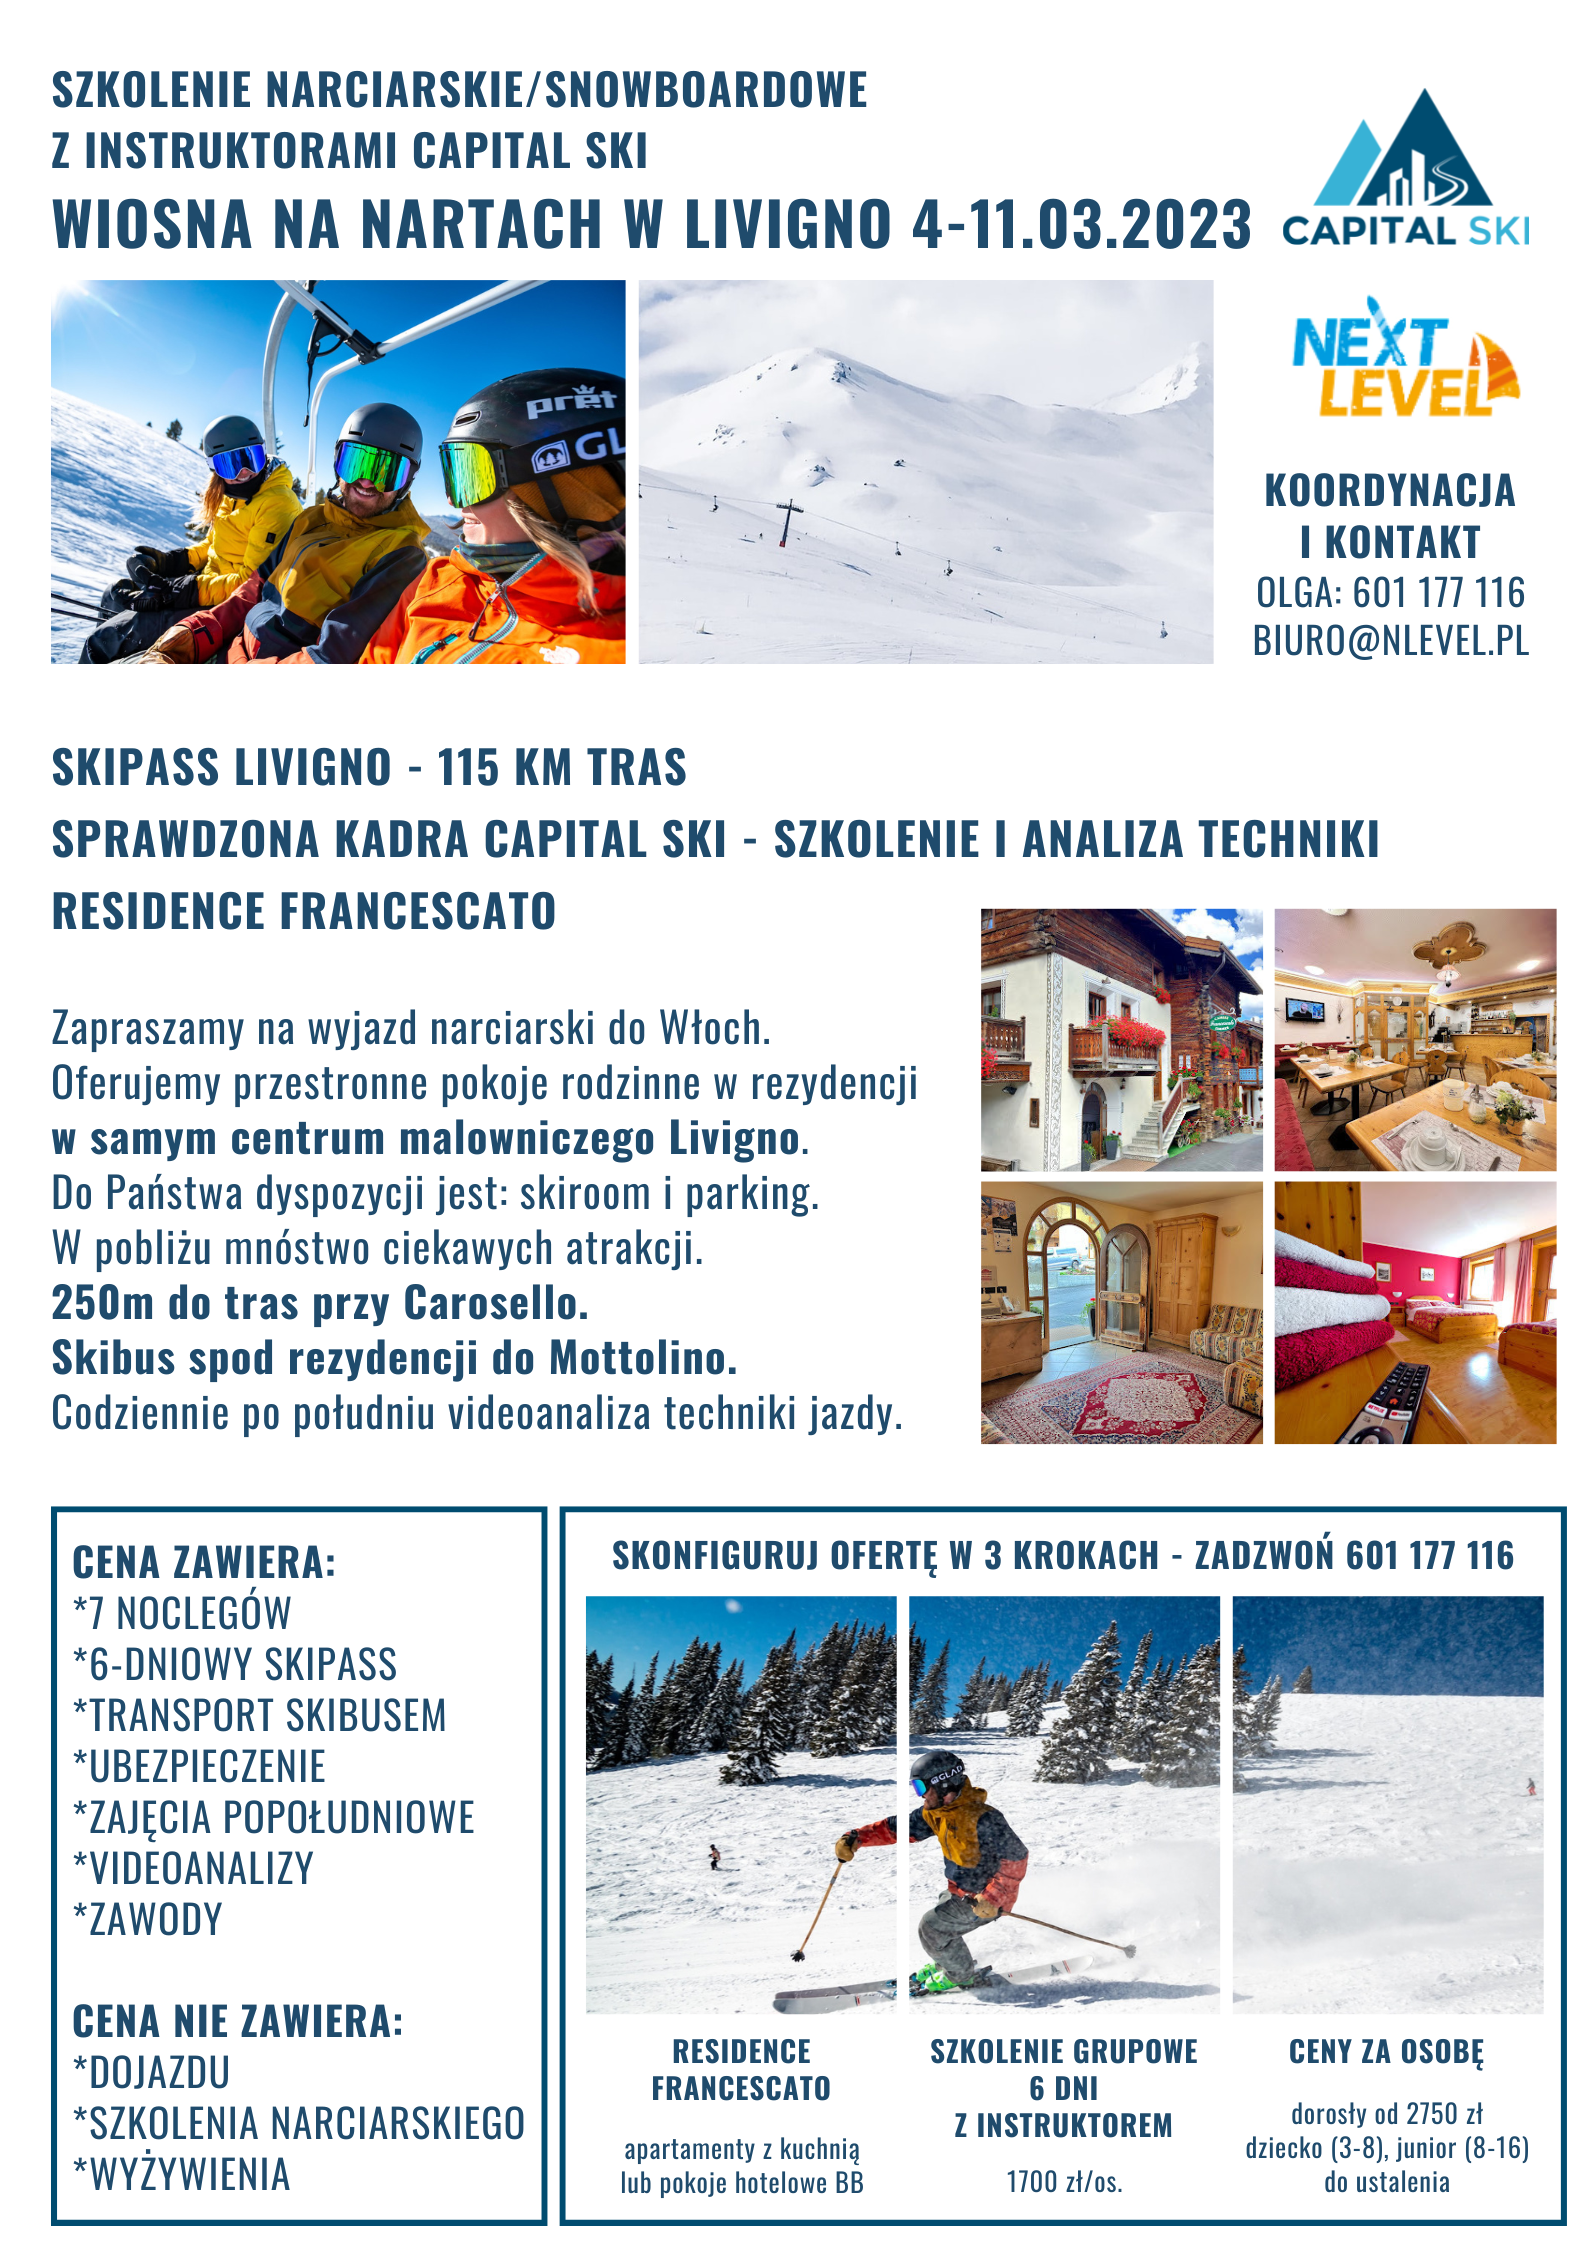 Capital Ski - wiosna w Livigno